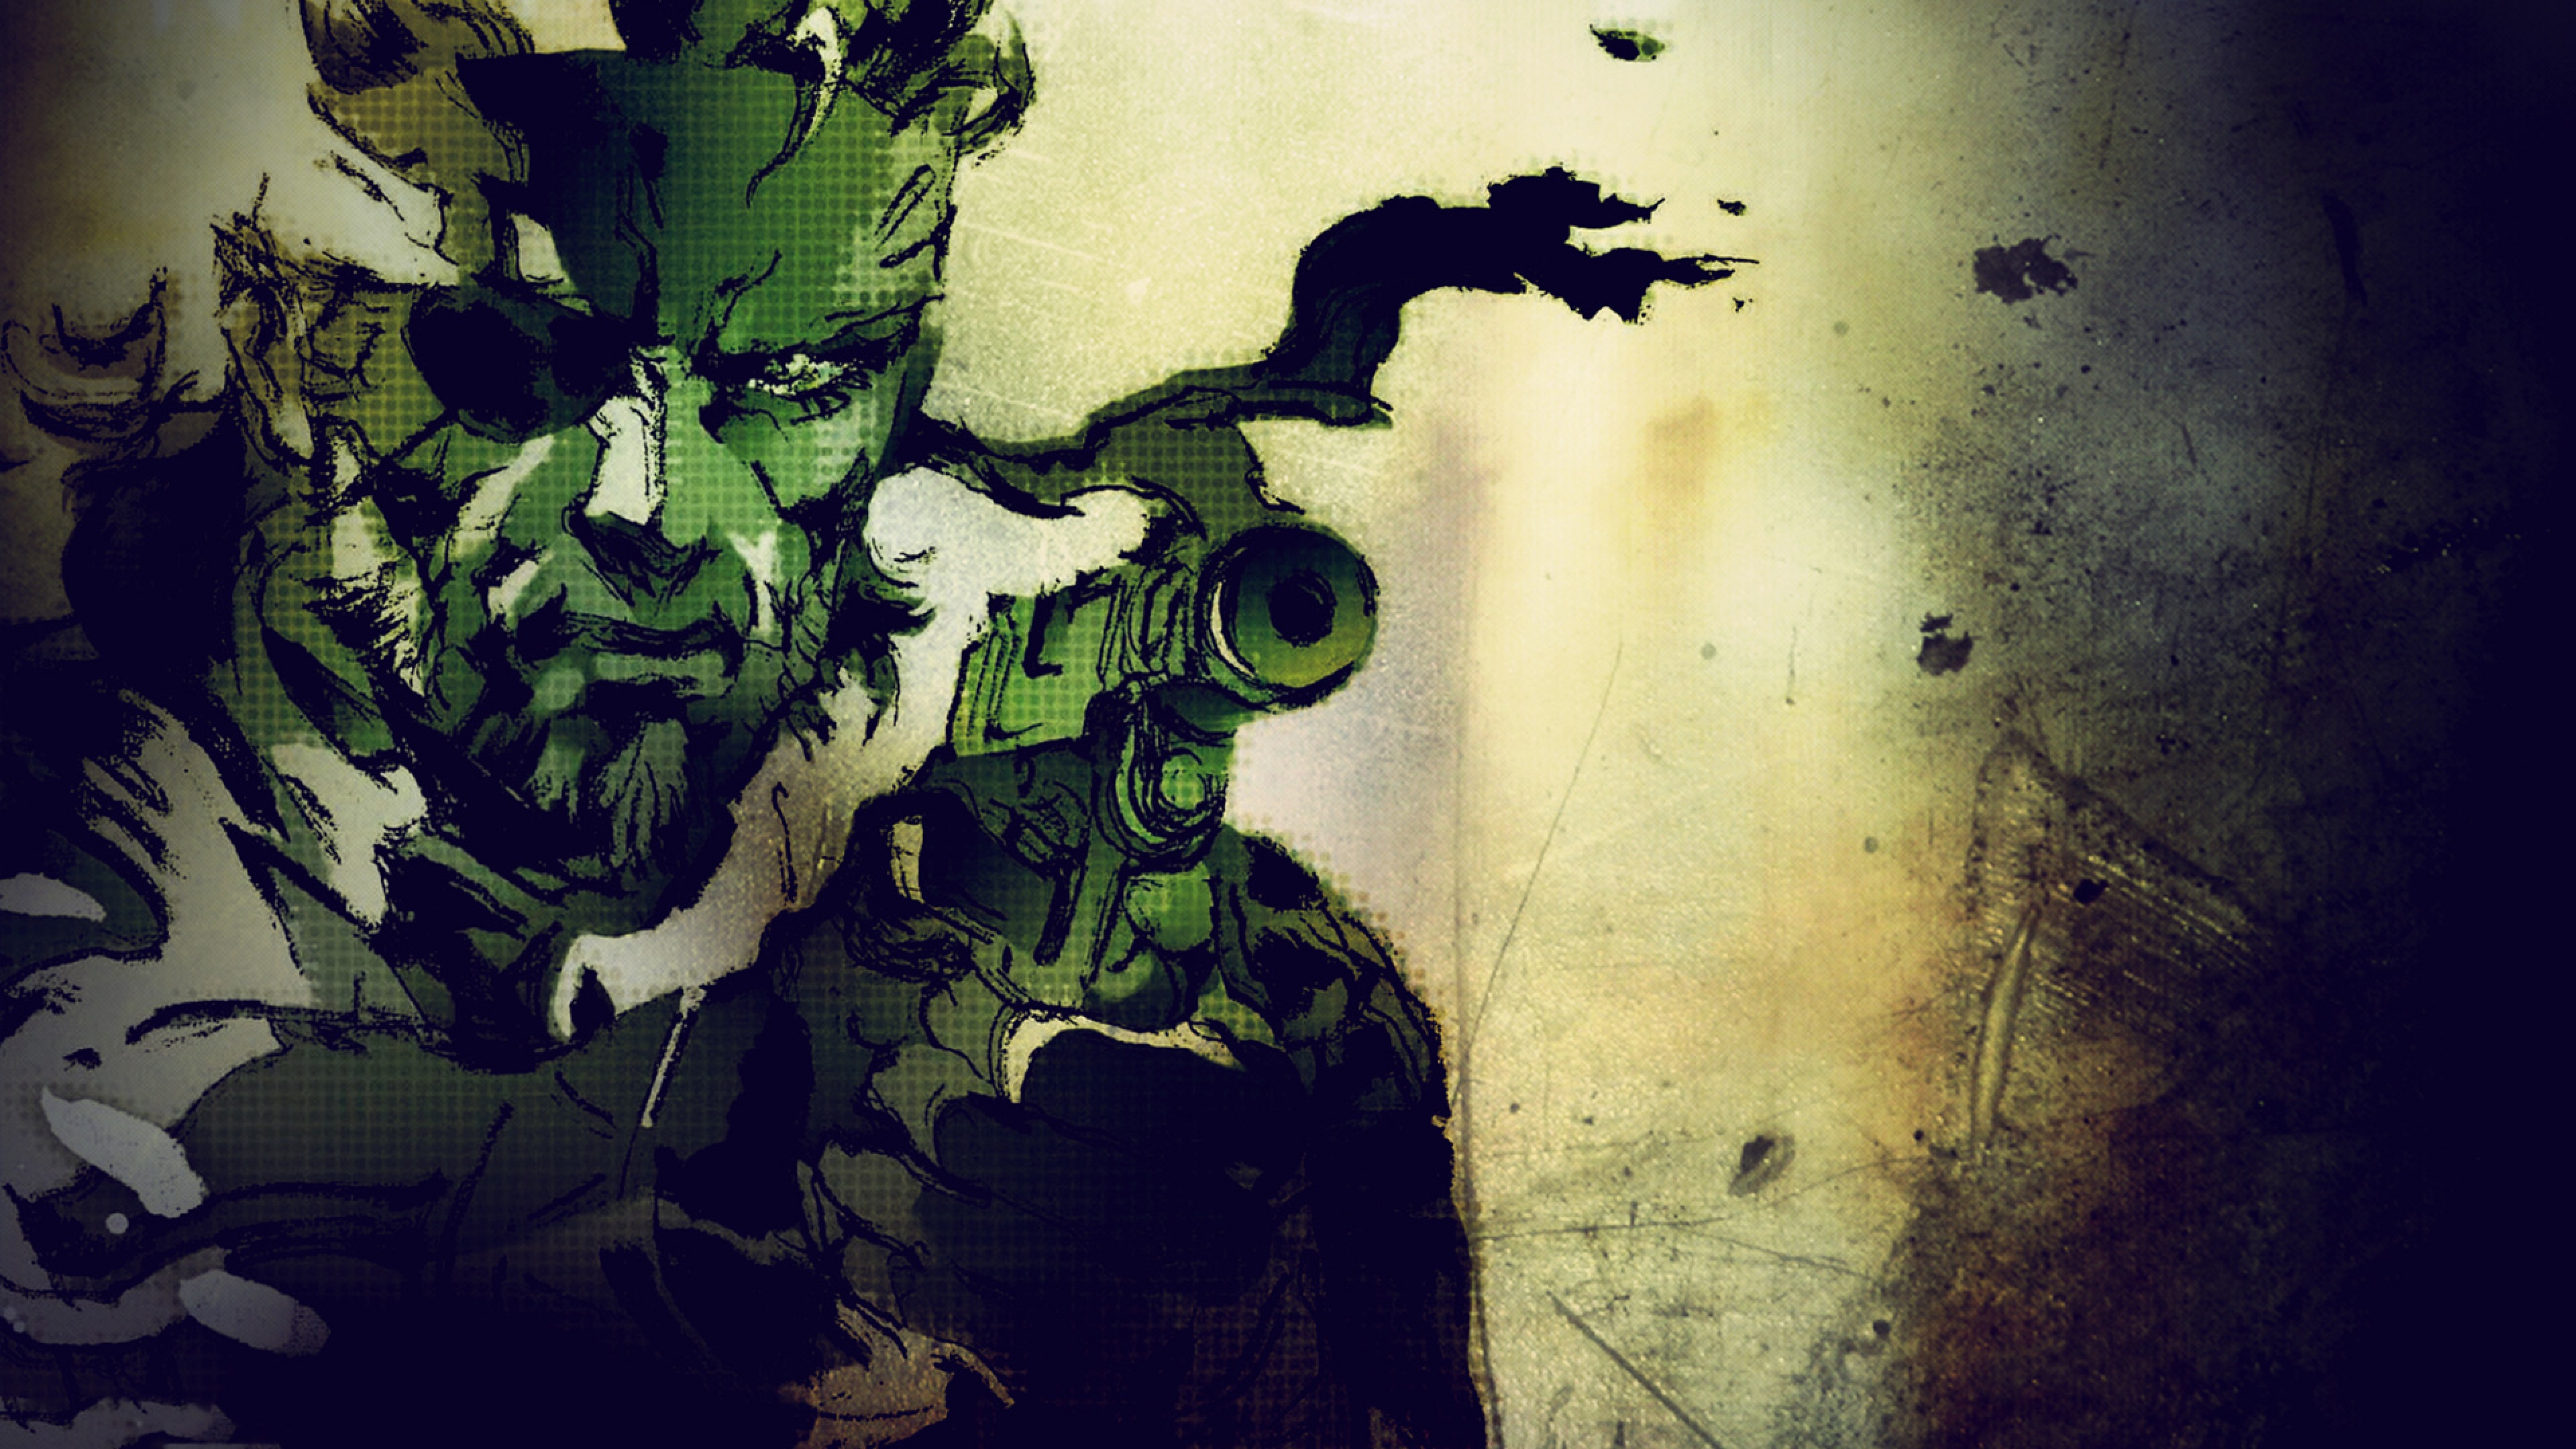 Metal Gear Solid Wallpaper Background 2991 3840x2160